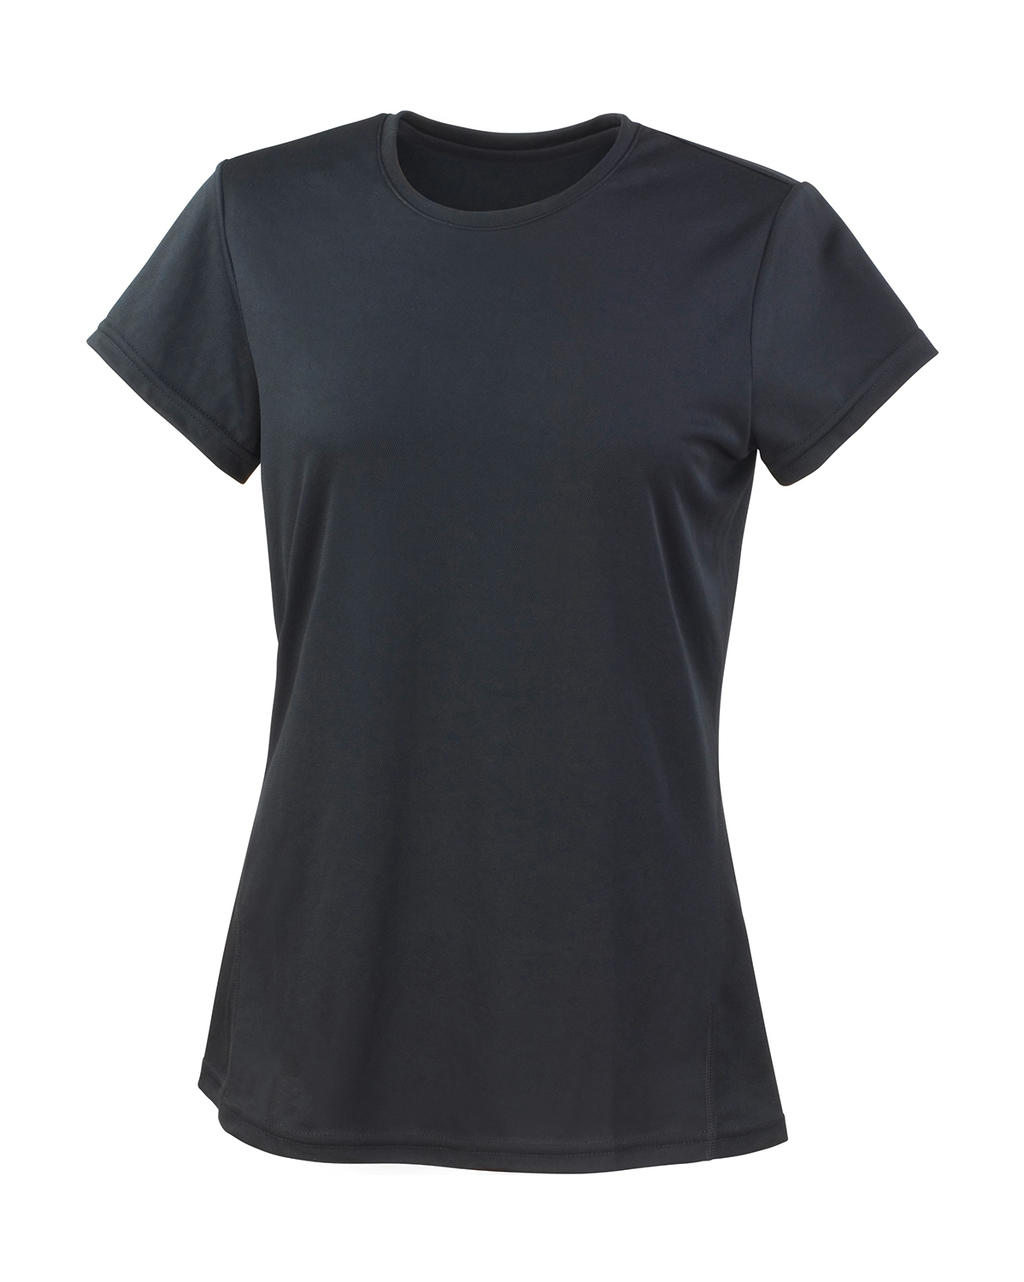  Ladies Performance T-Shirt in Farbe Black